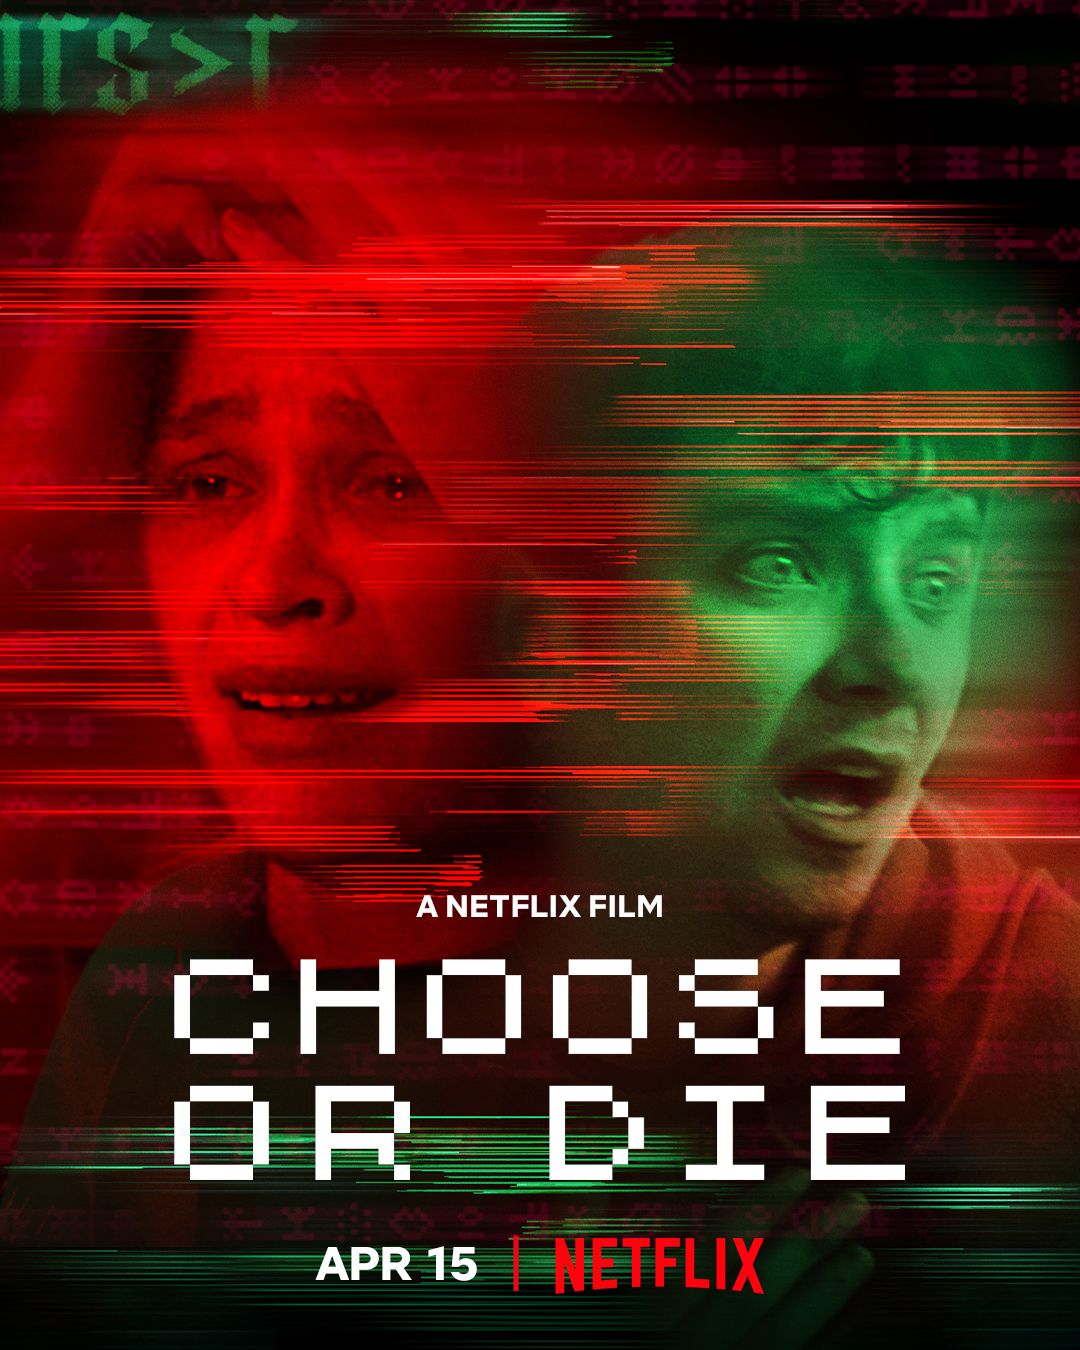 affiche du film Choose or Die